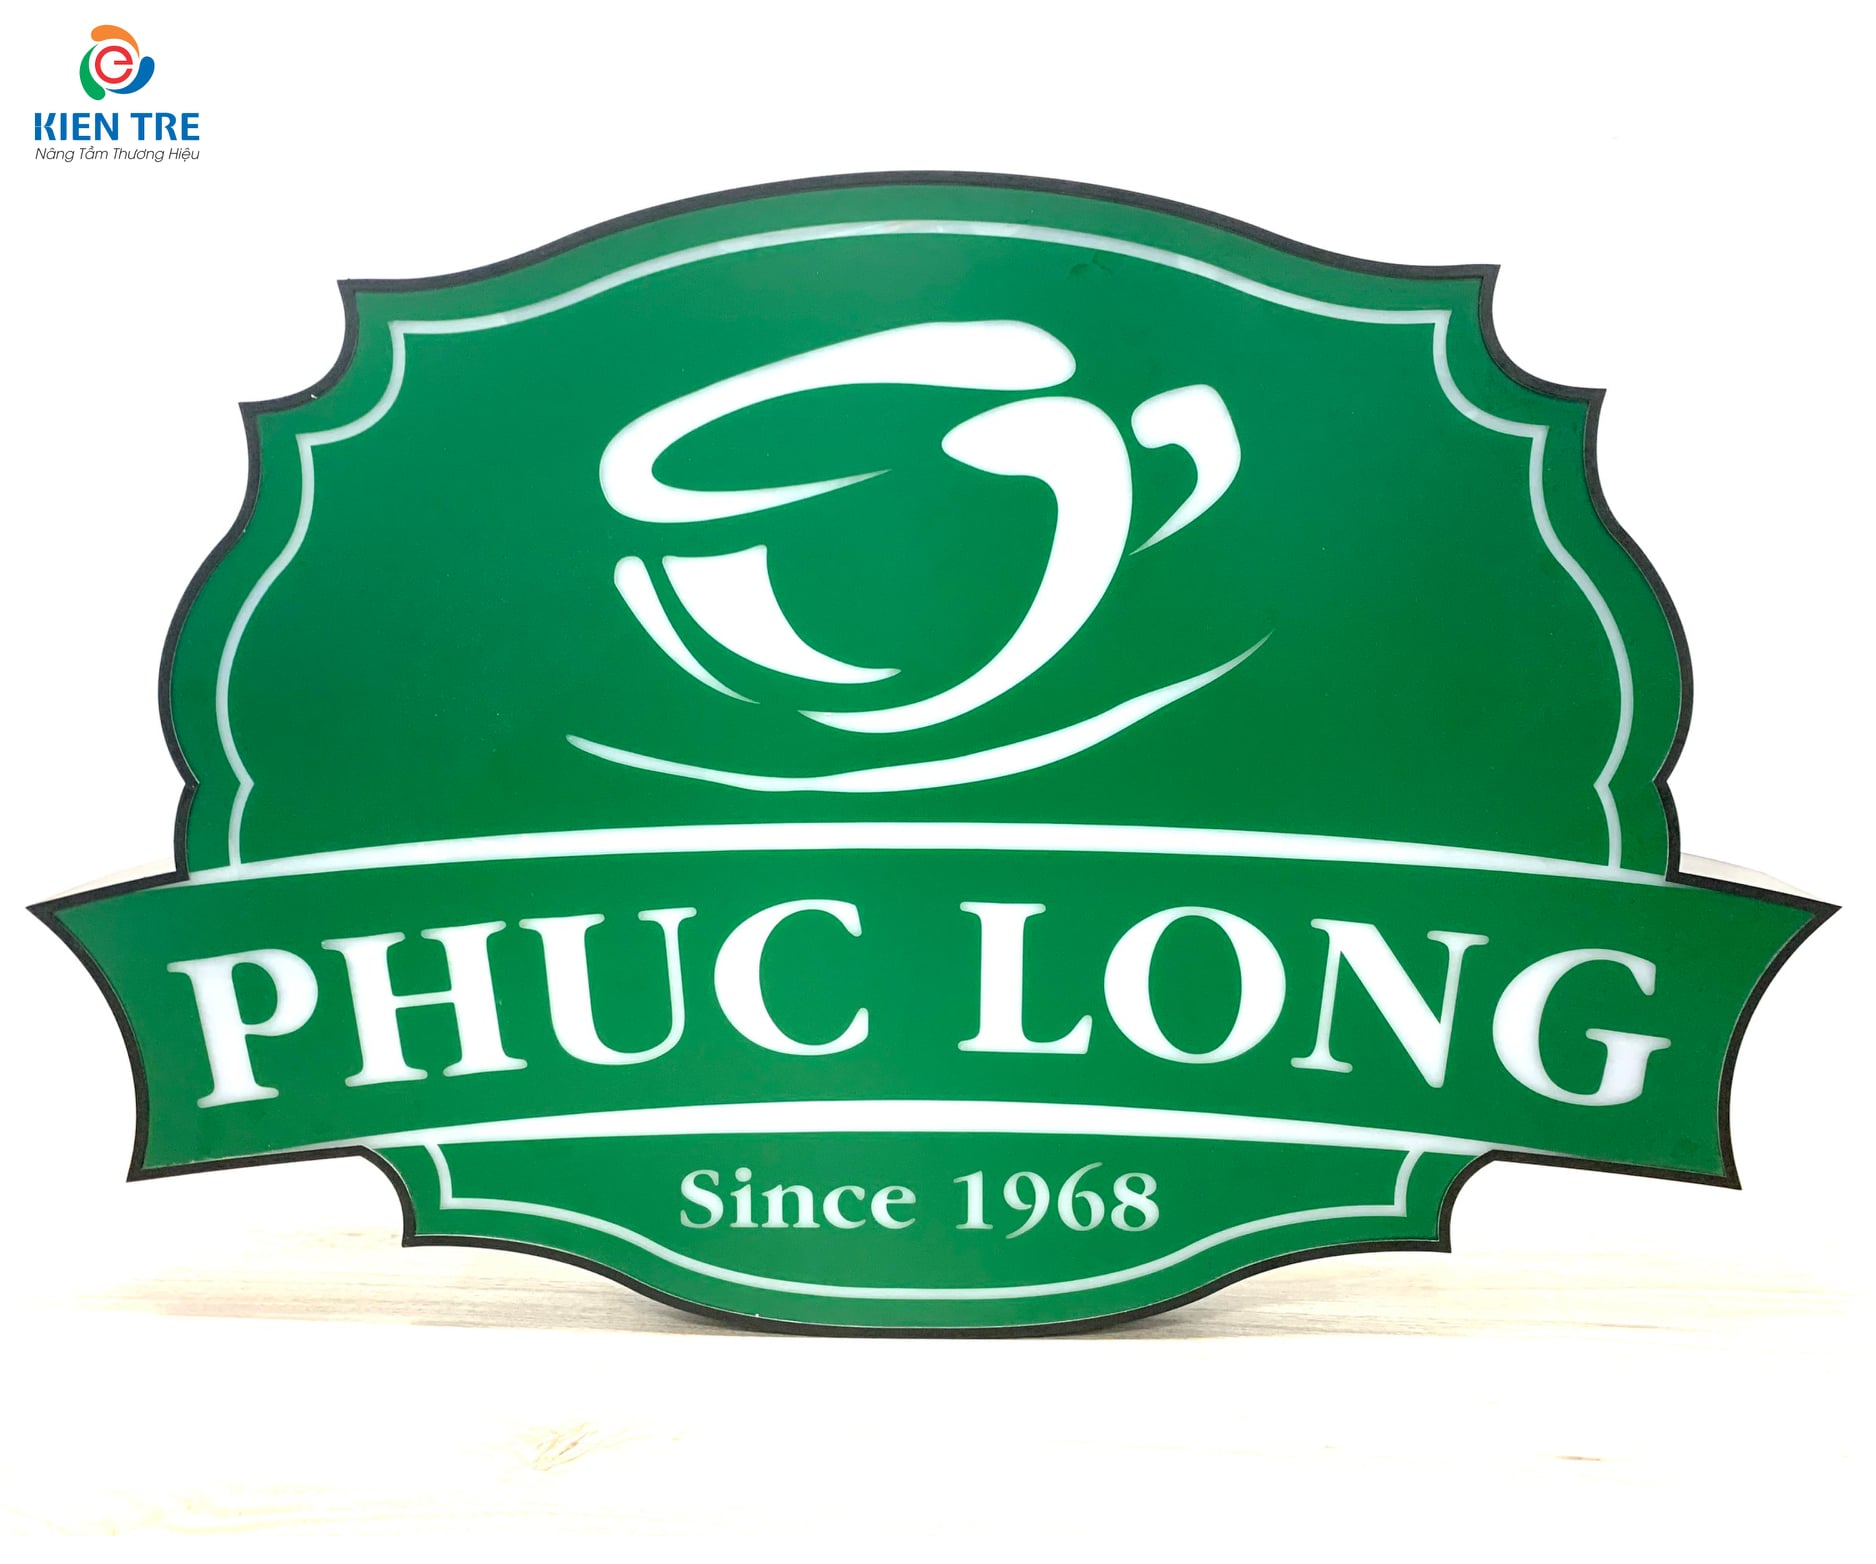 Phuc Long Coffee & Tea